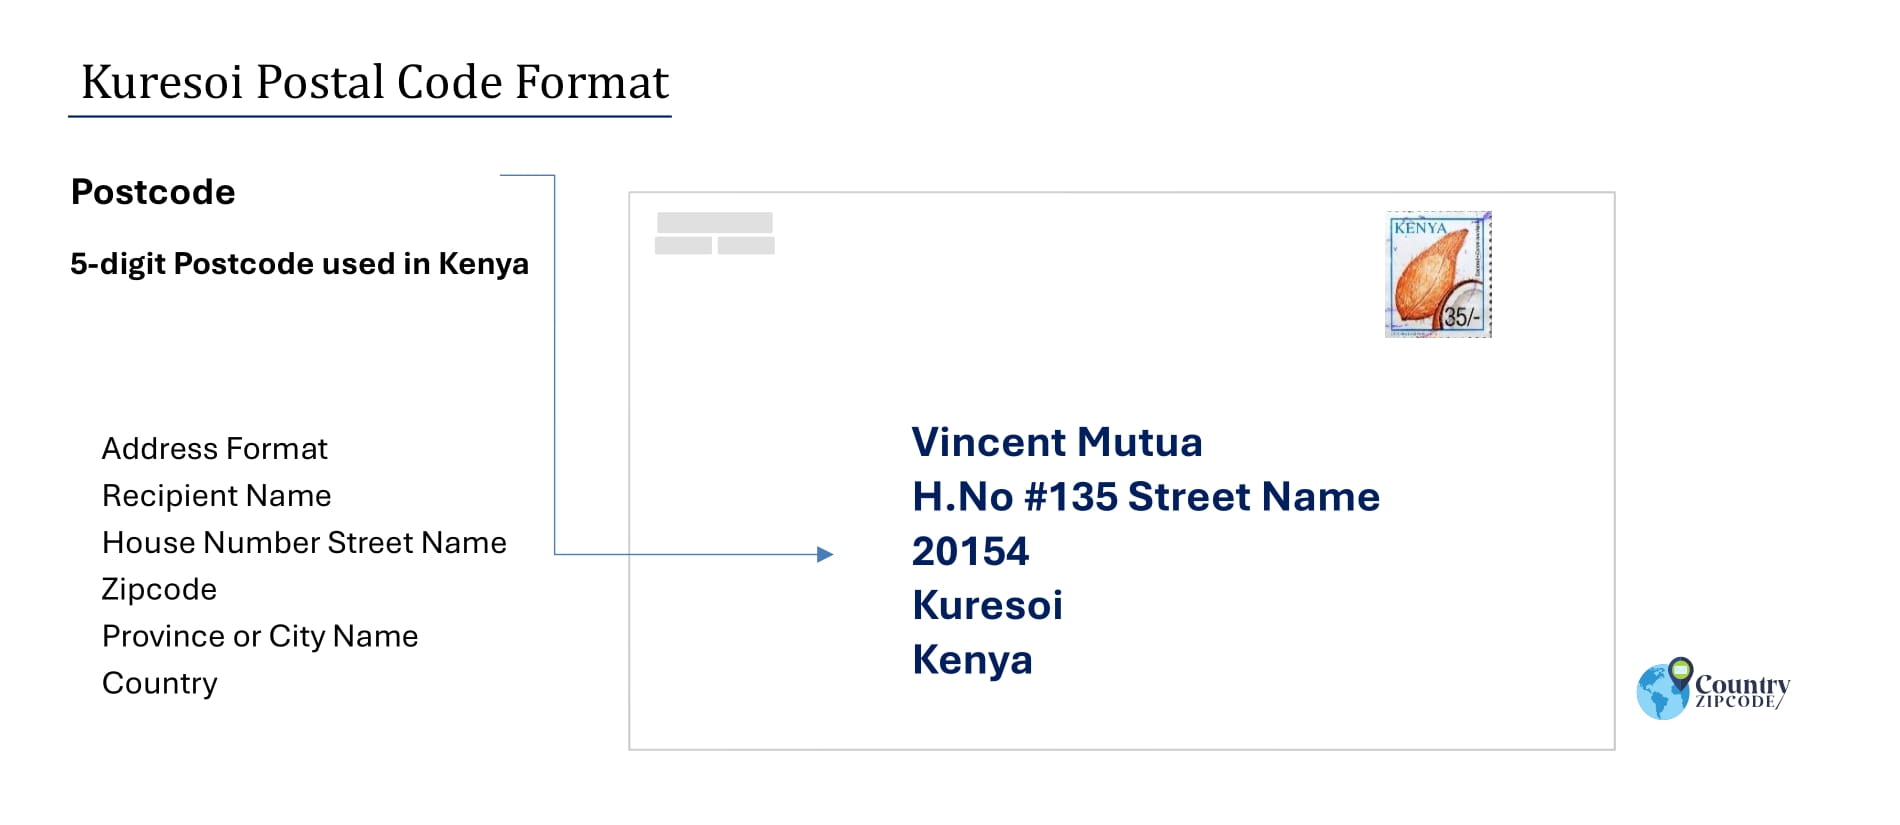 Example of Kuresoi Address and postal code format